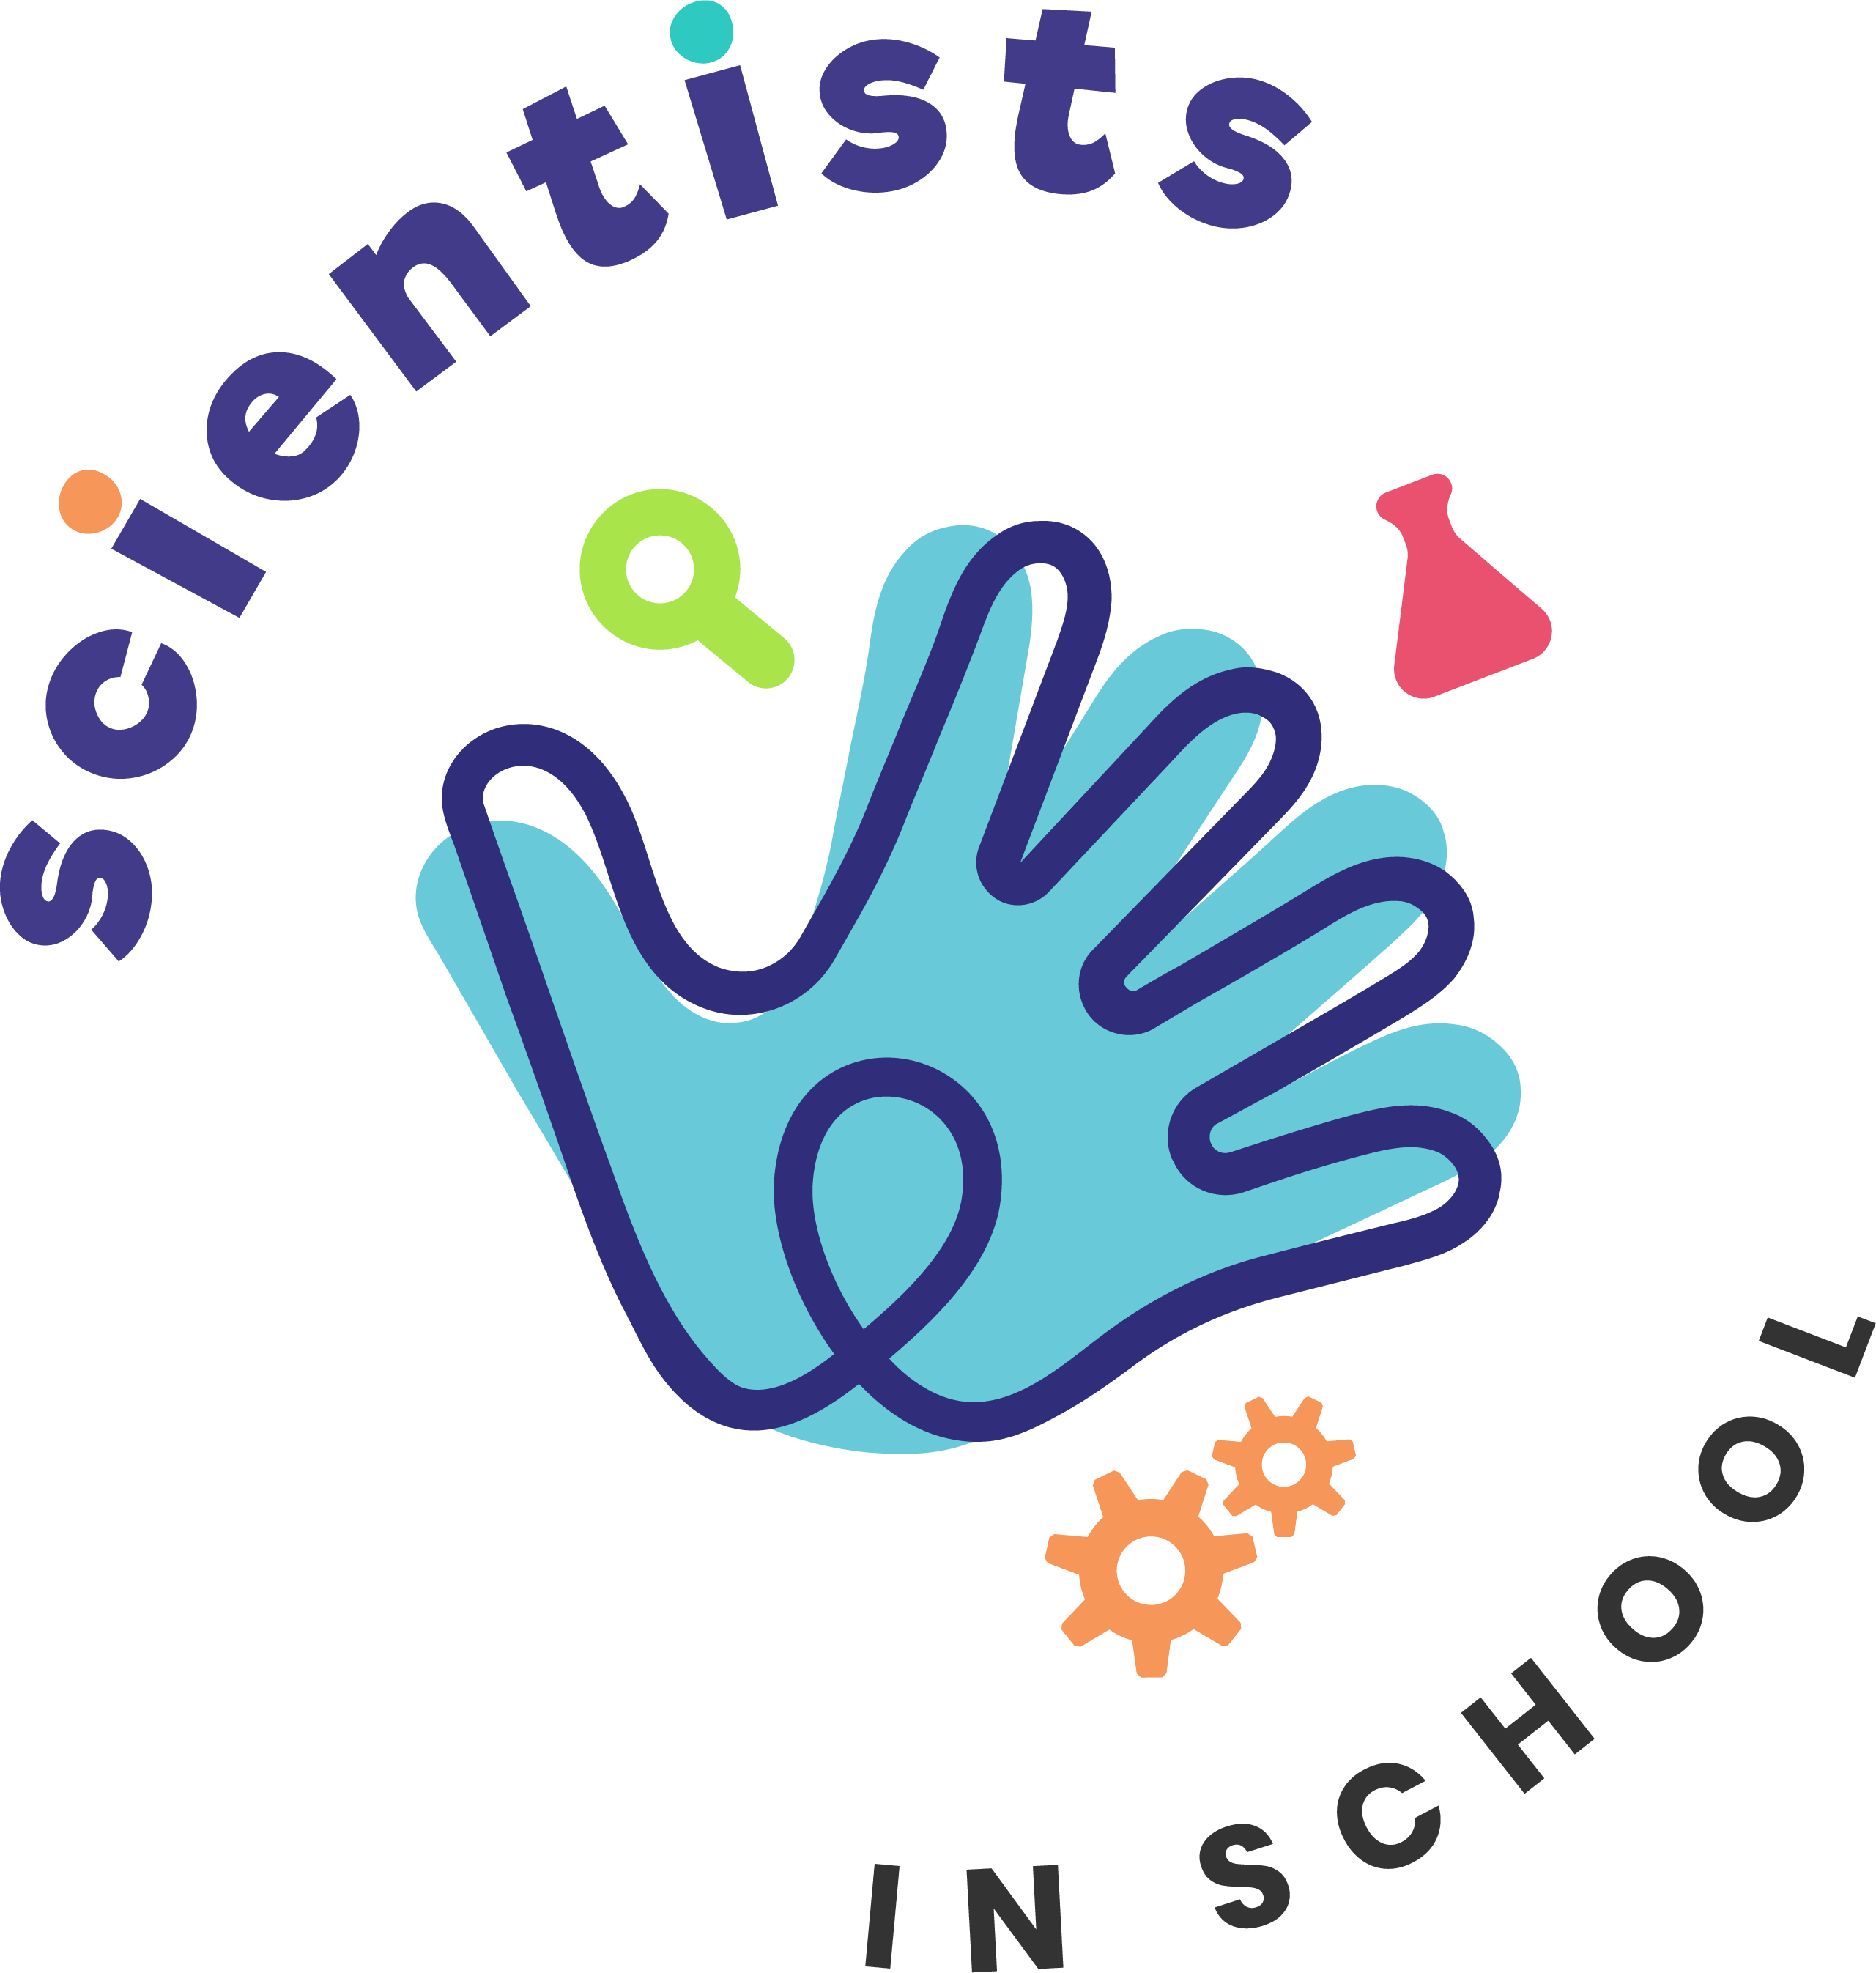 Scientists in School logo